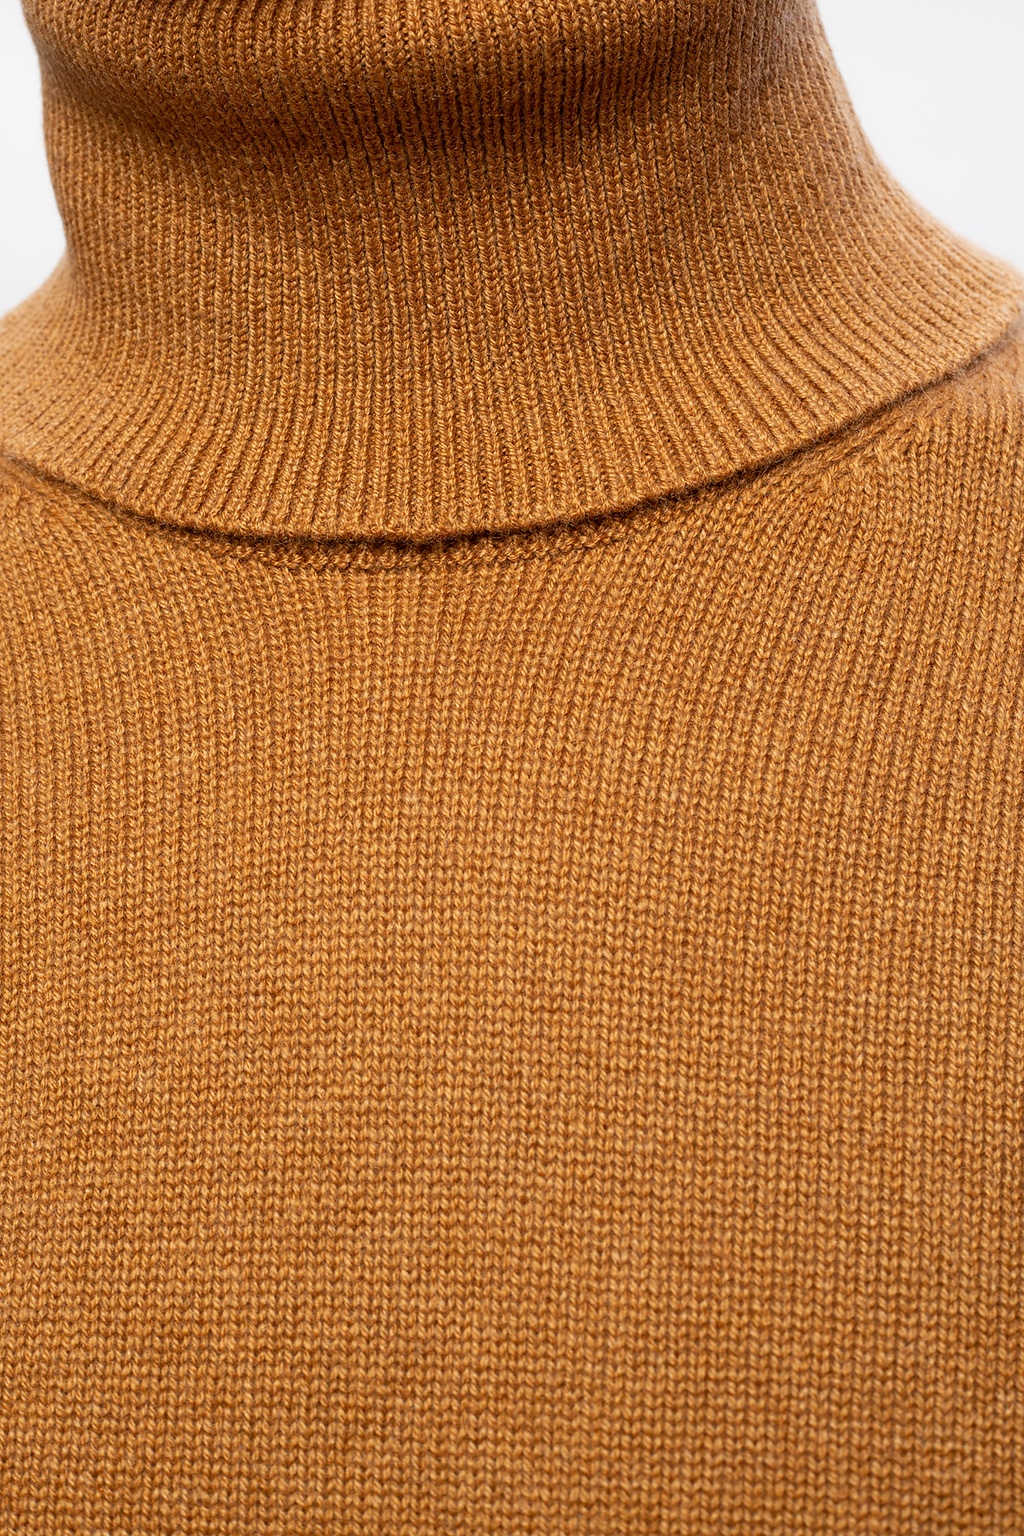 dolce and gabbana cashmere sweater